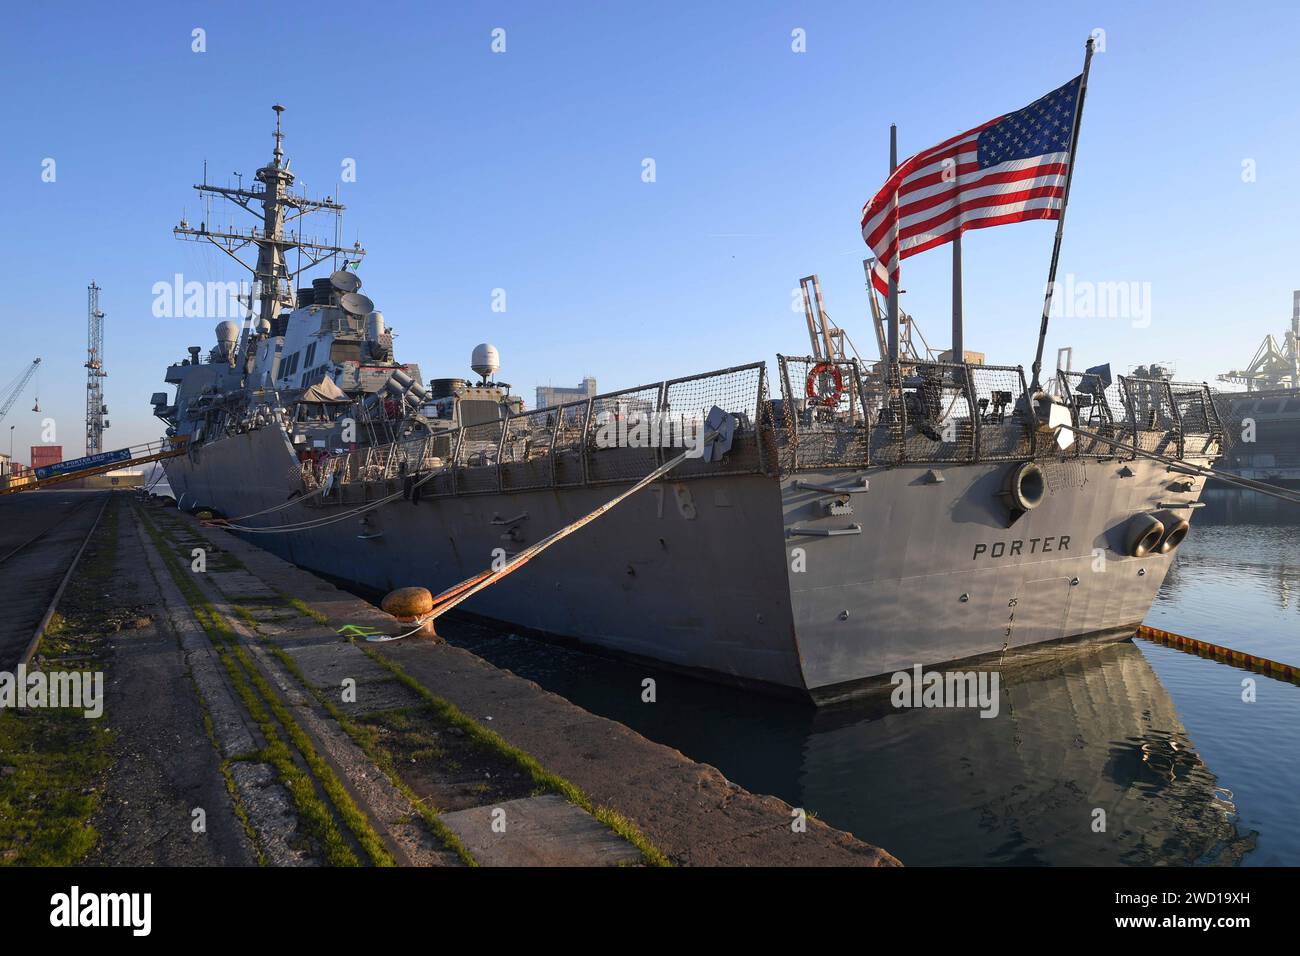 Der Raketenzerstörer USS Porter sitzt pierside in Venedig. Stockfoto